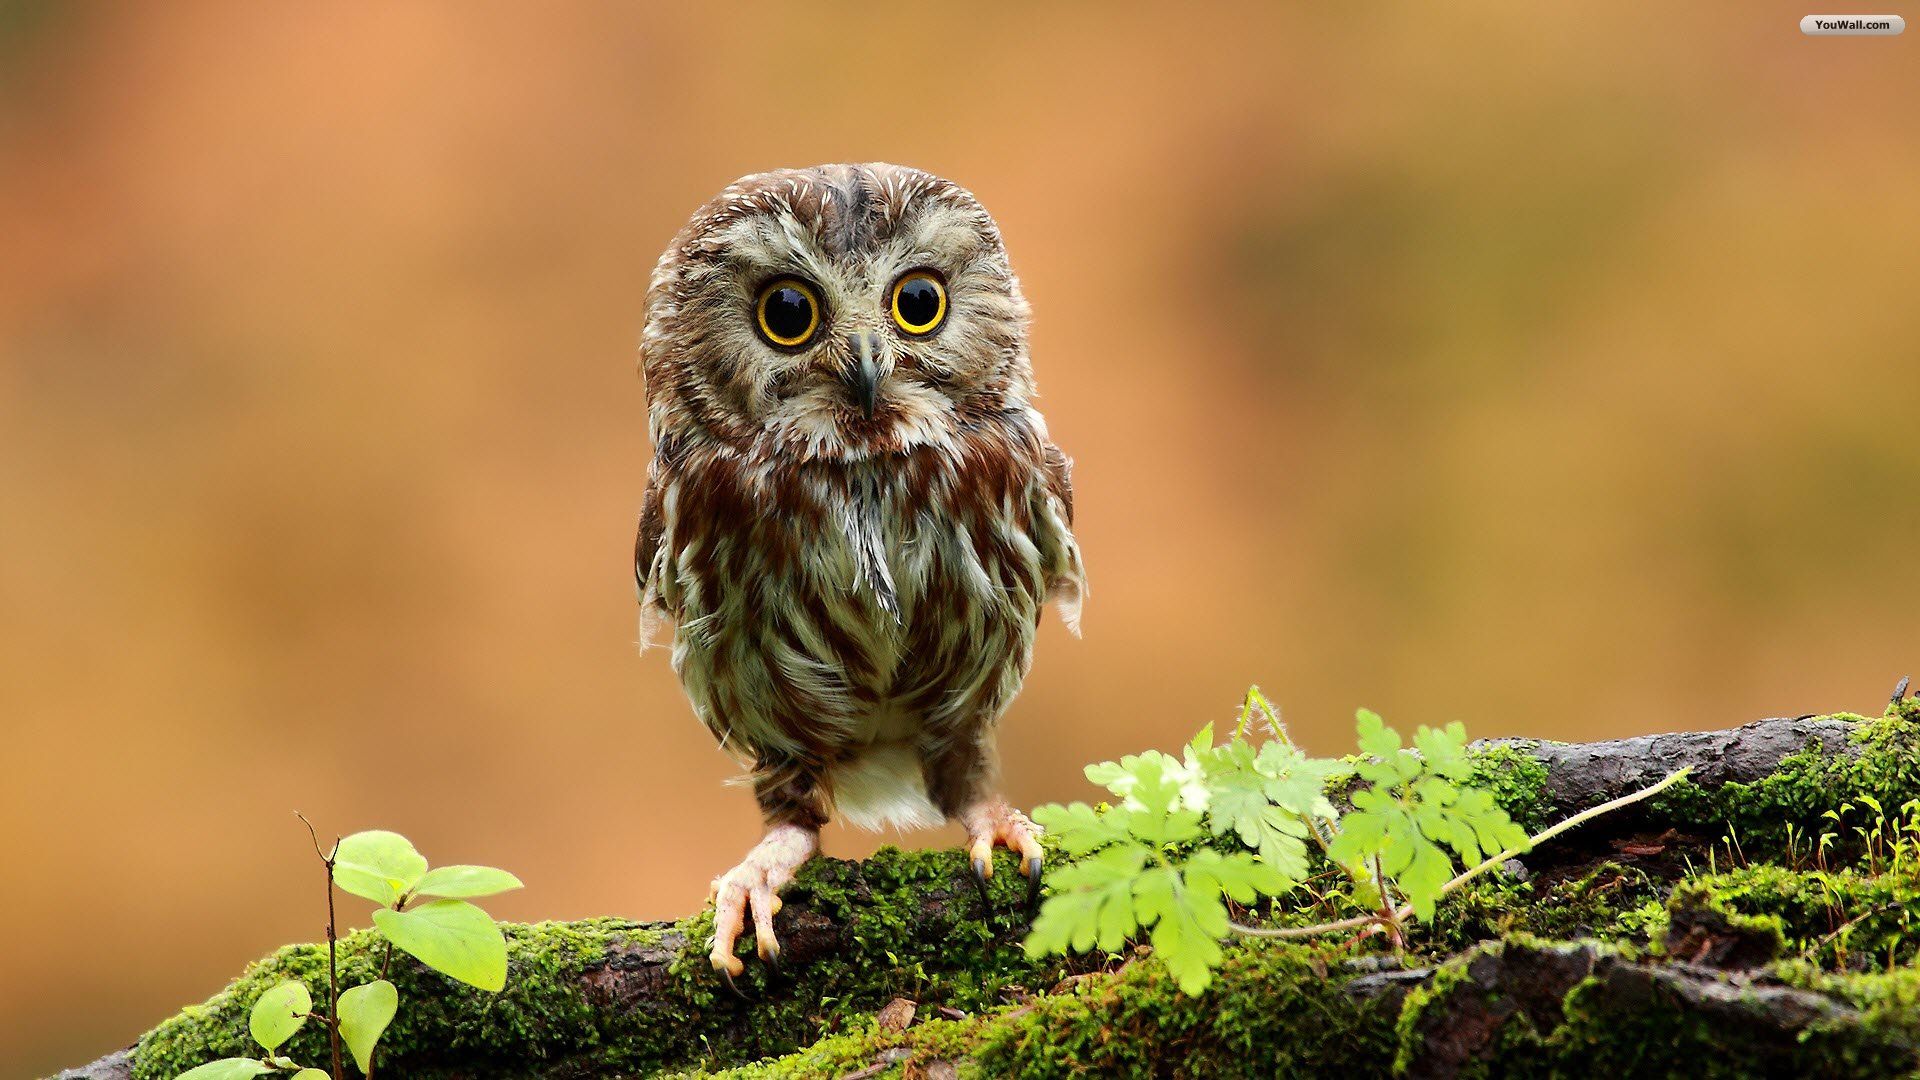 Cute Baby Owl - wallpaper.